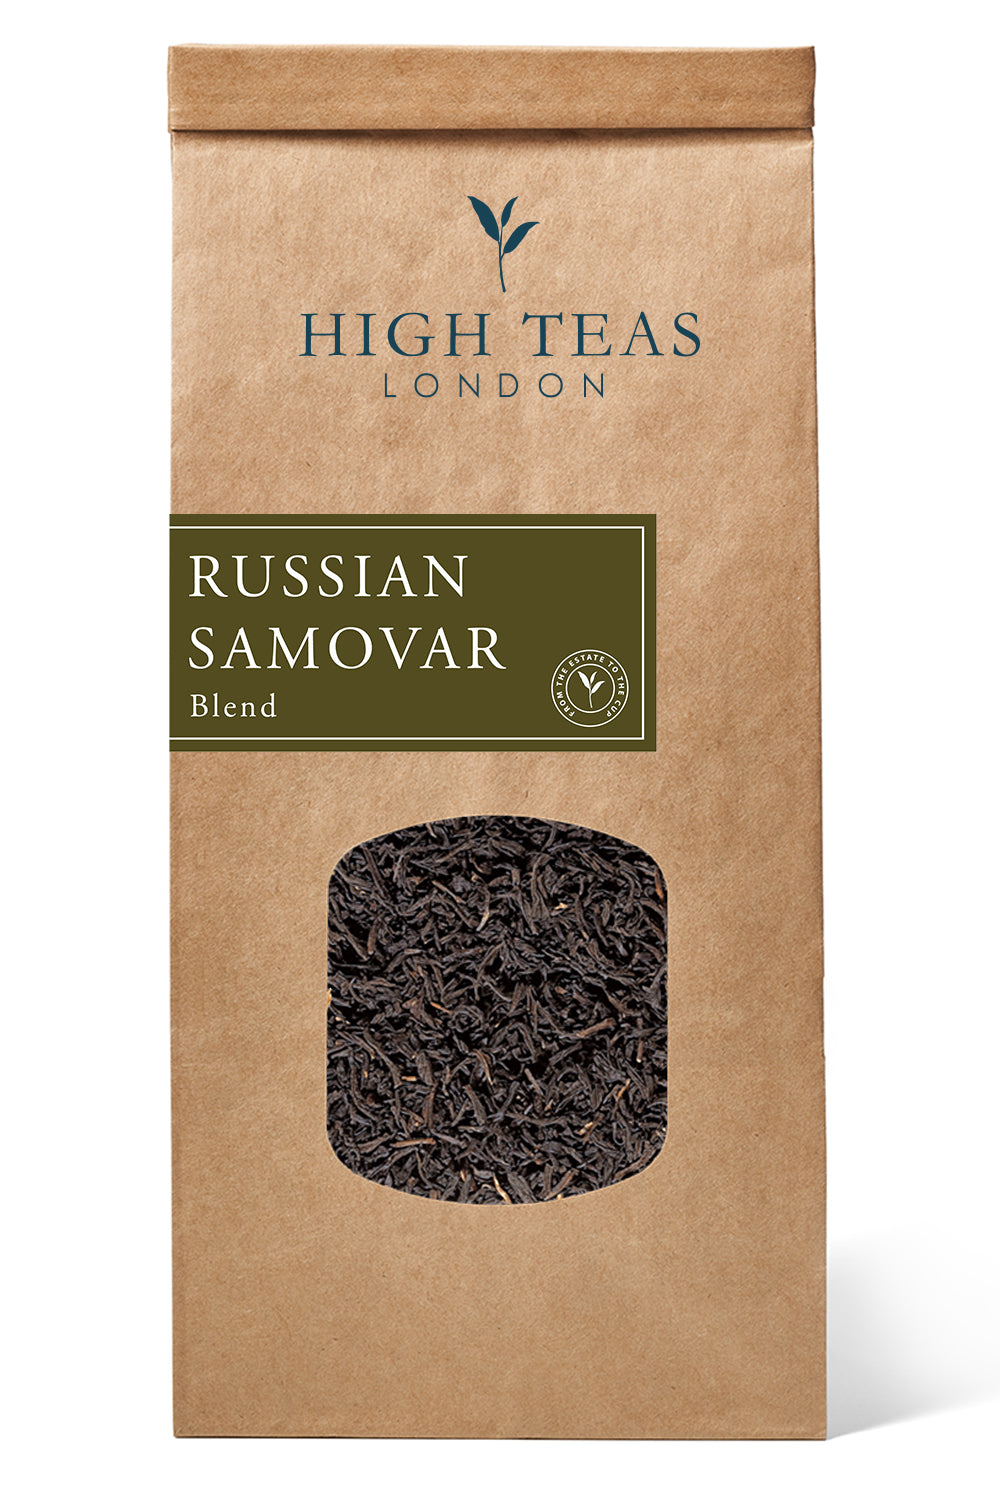 Russian Samovar Blend-250g-Loose Leaf Tea-High Teas